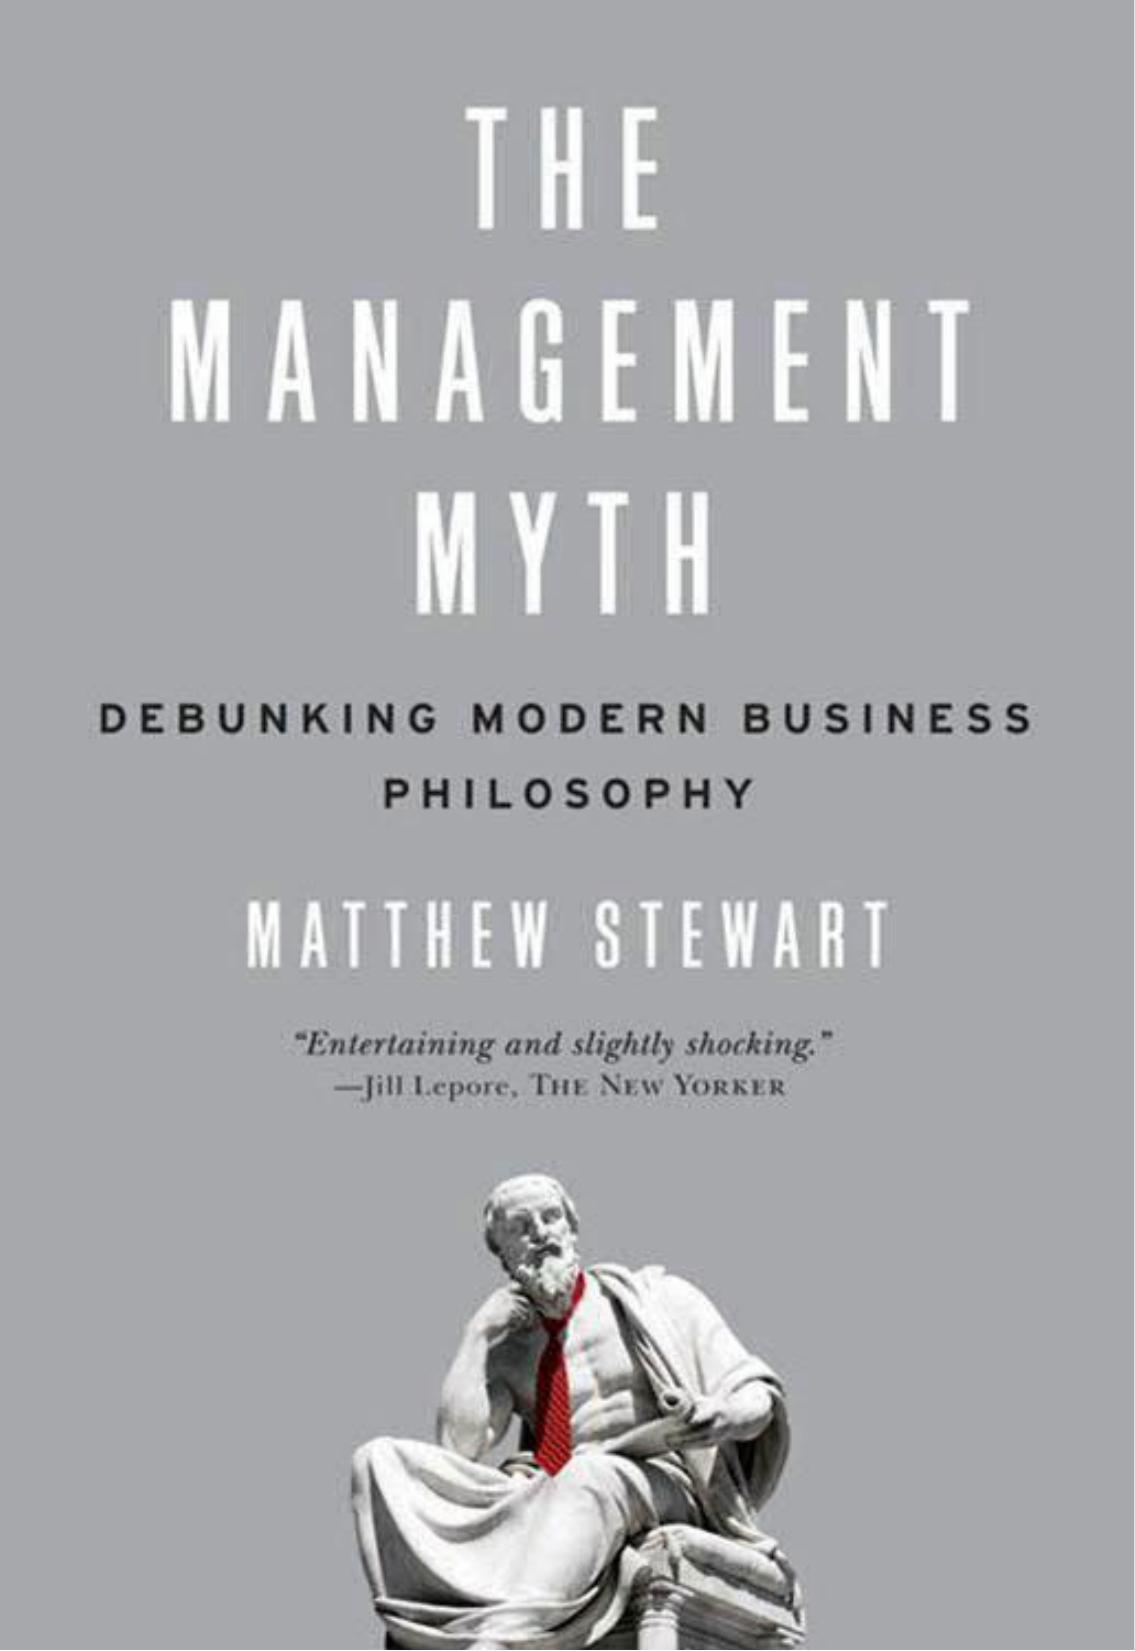 The Management Myth: Debunking Modern Business Philosophy by Matthew Stewart